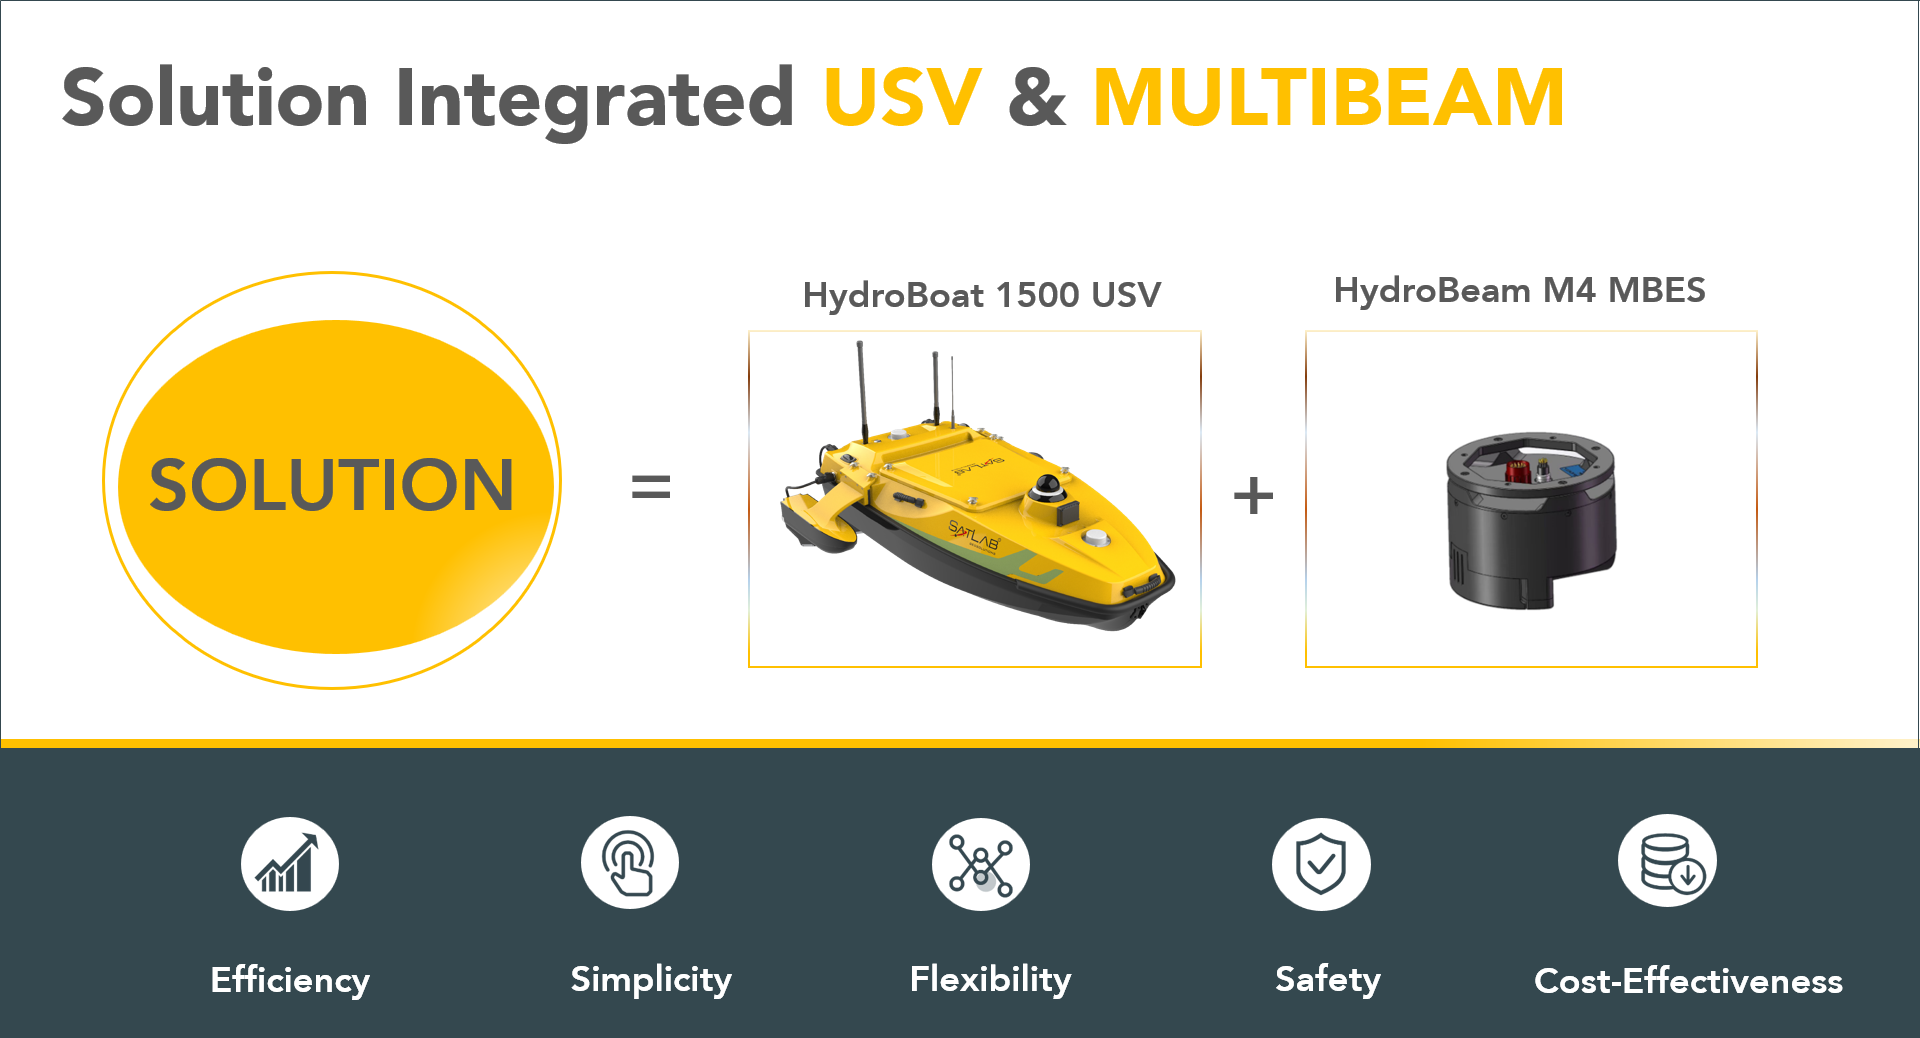 Solution integrated USV & Multibeam